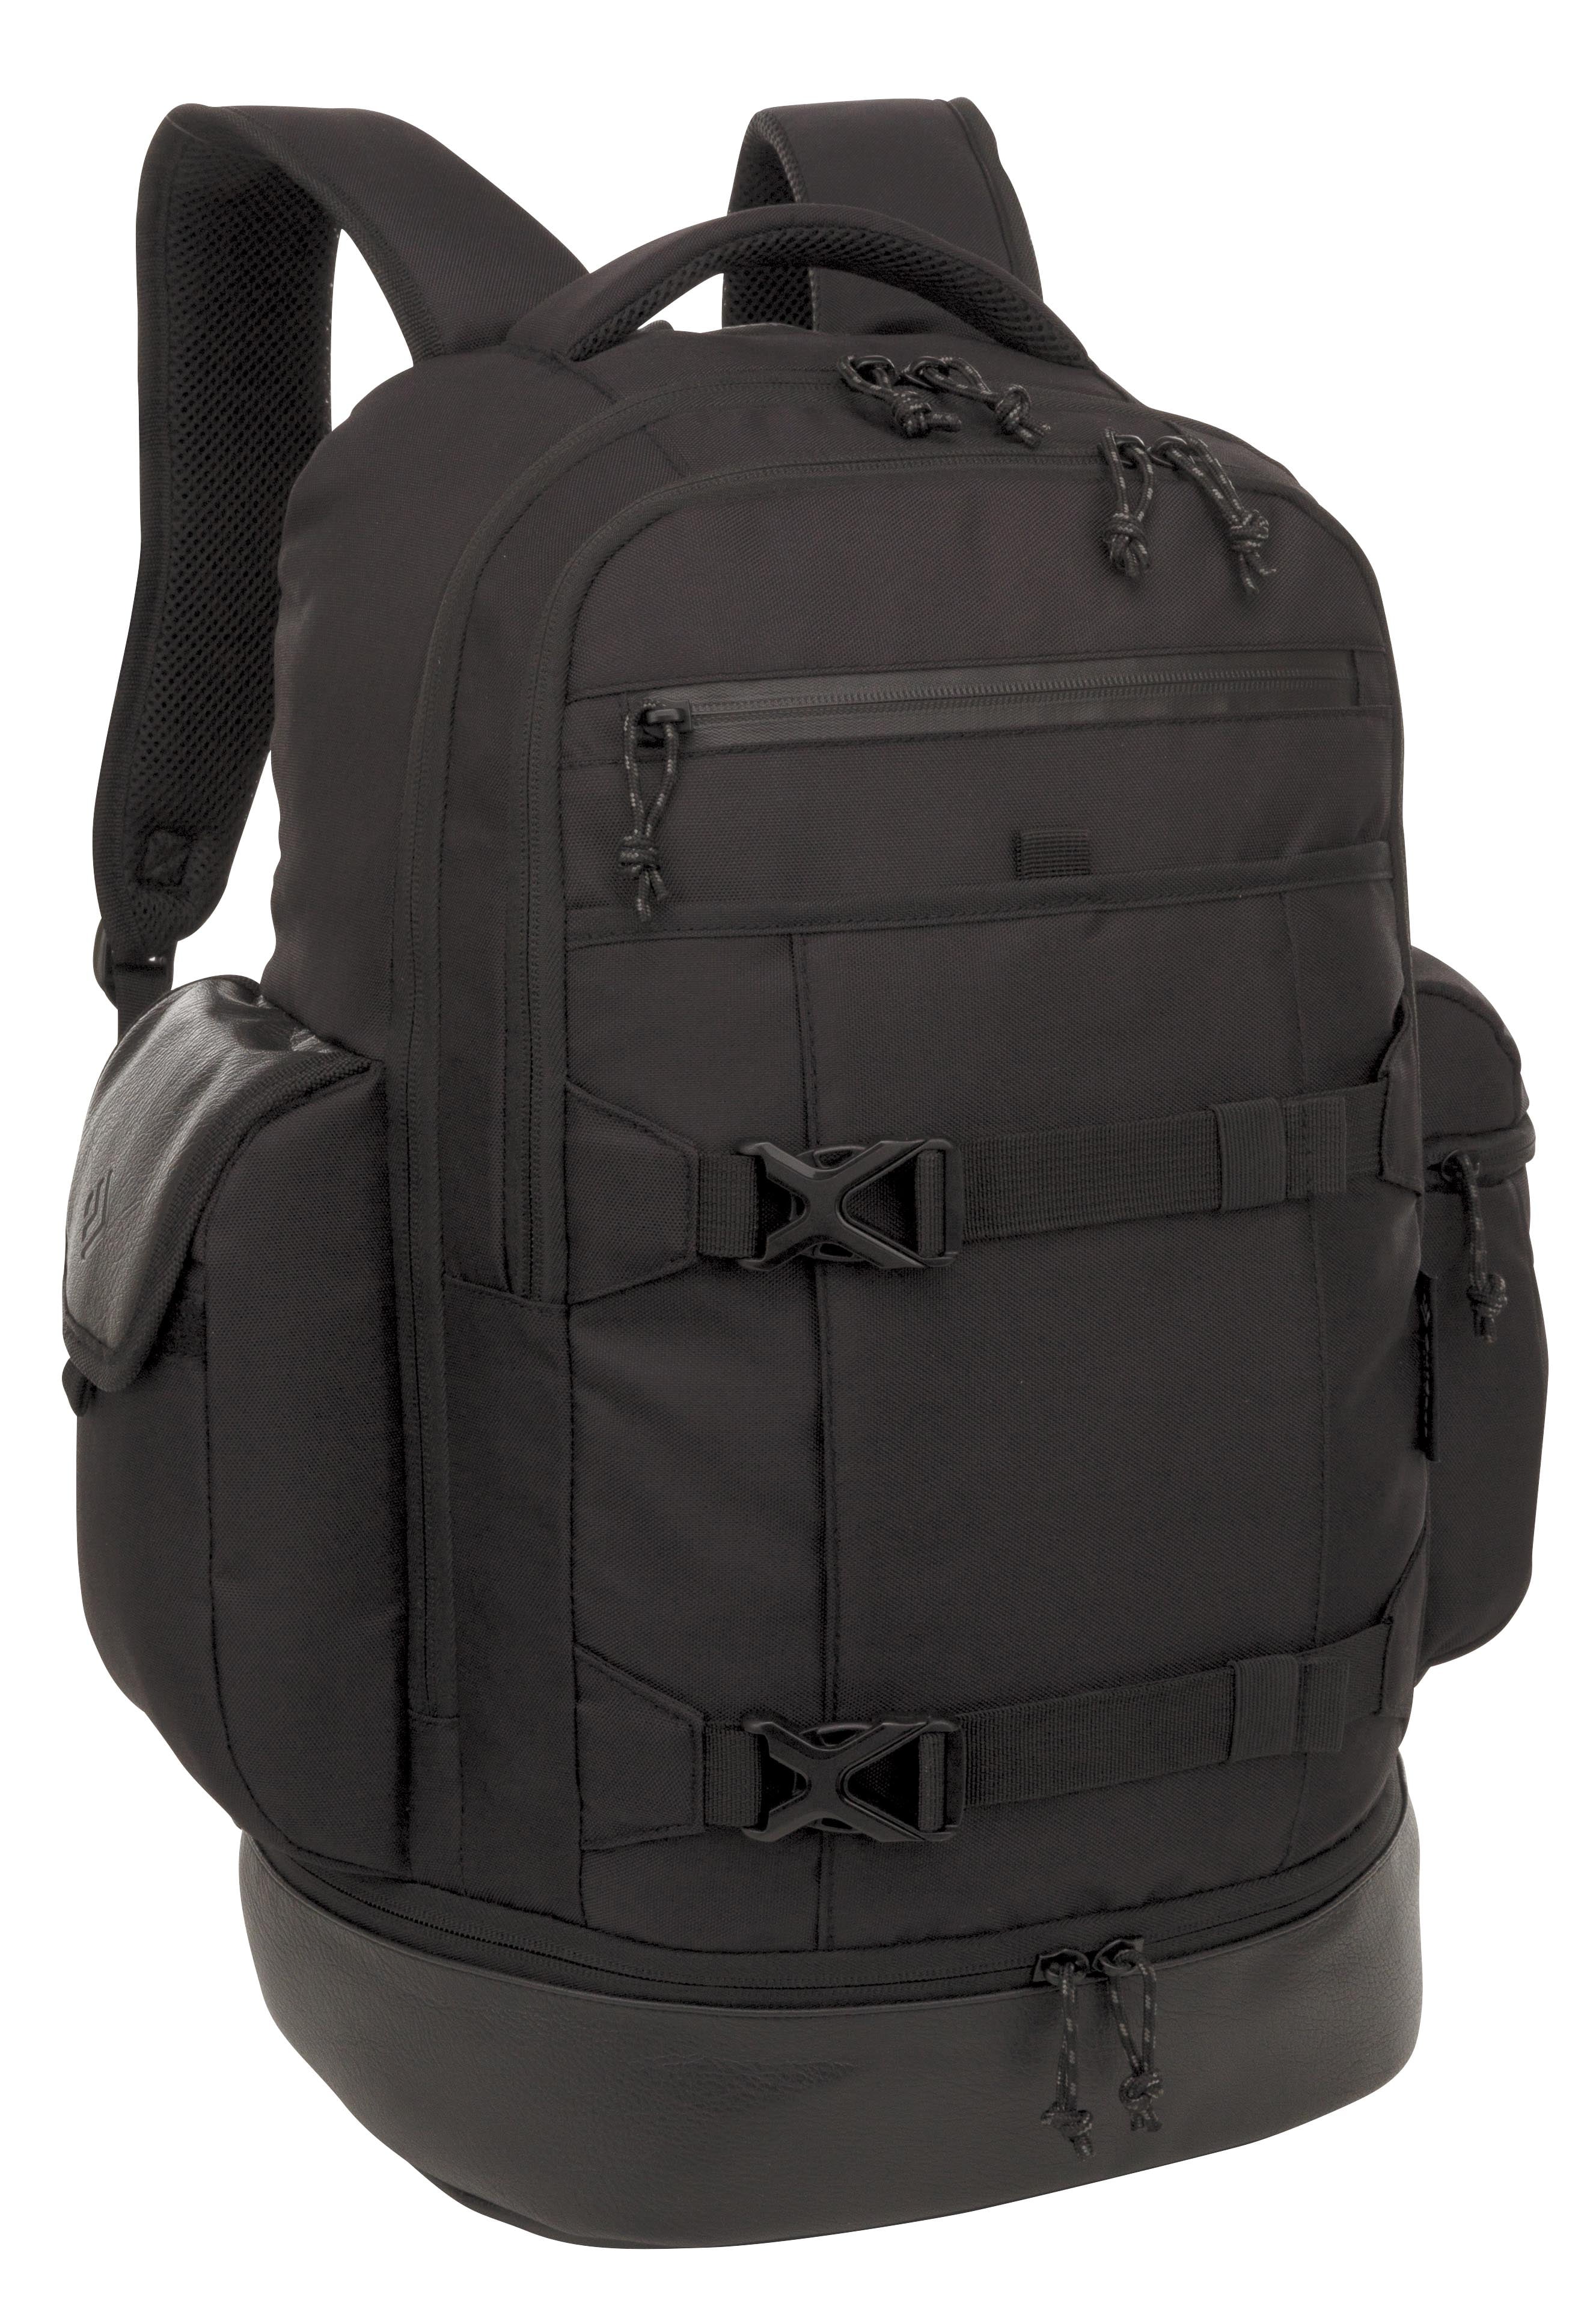 Outdoor Products Weekender 32 Ltr Backpack, Black, Unisex